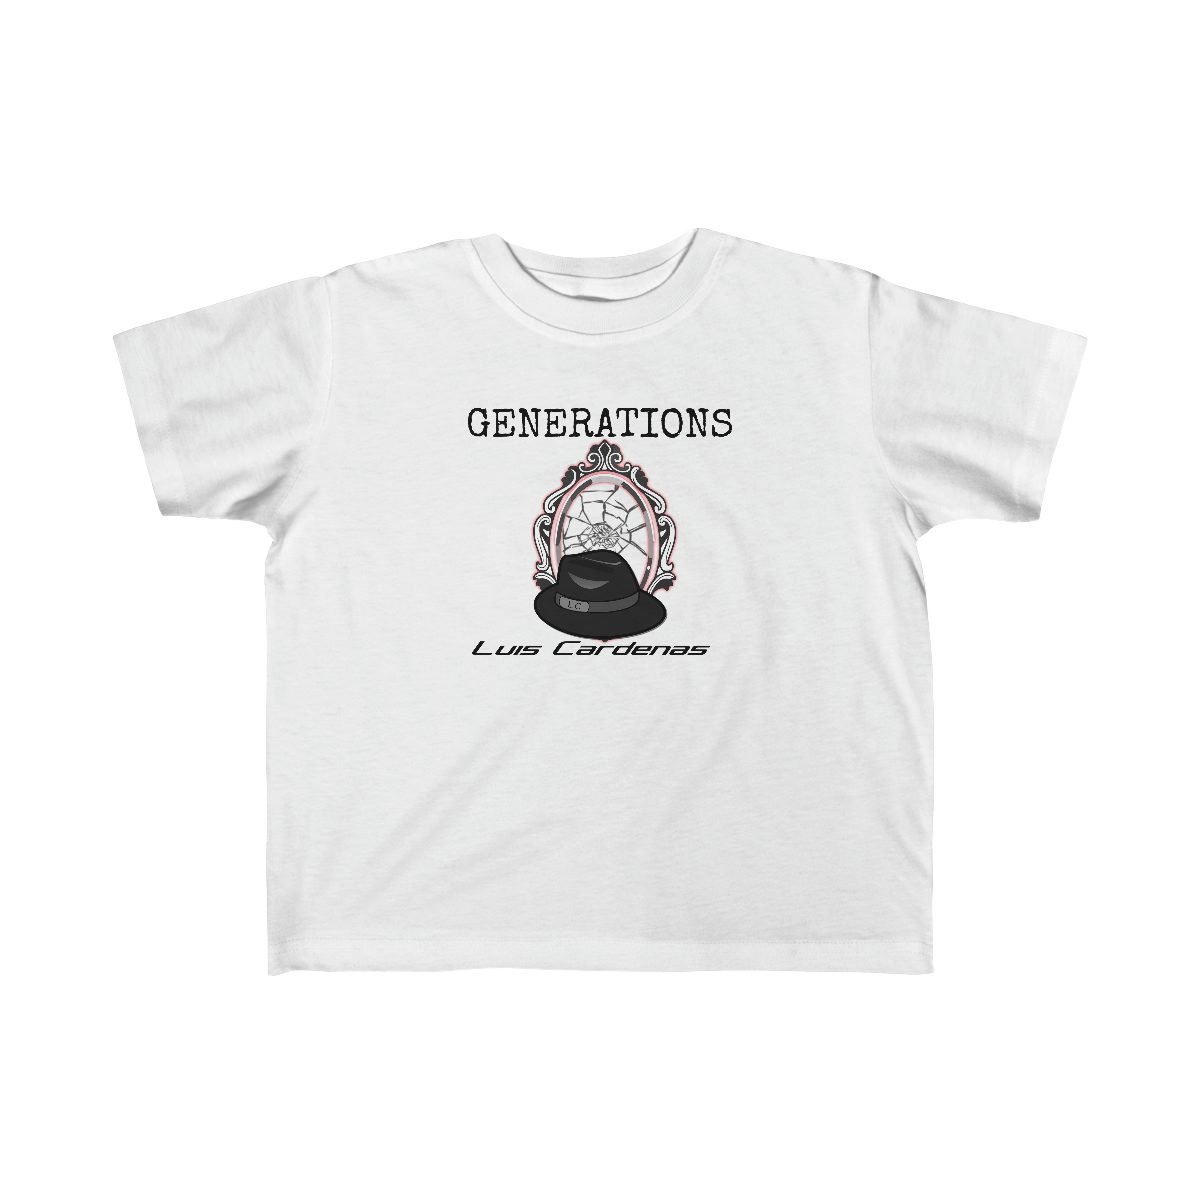 Luis Cardenas – Generations Toddler Short Sleeve Tshirt